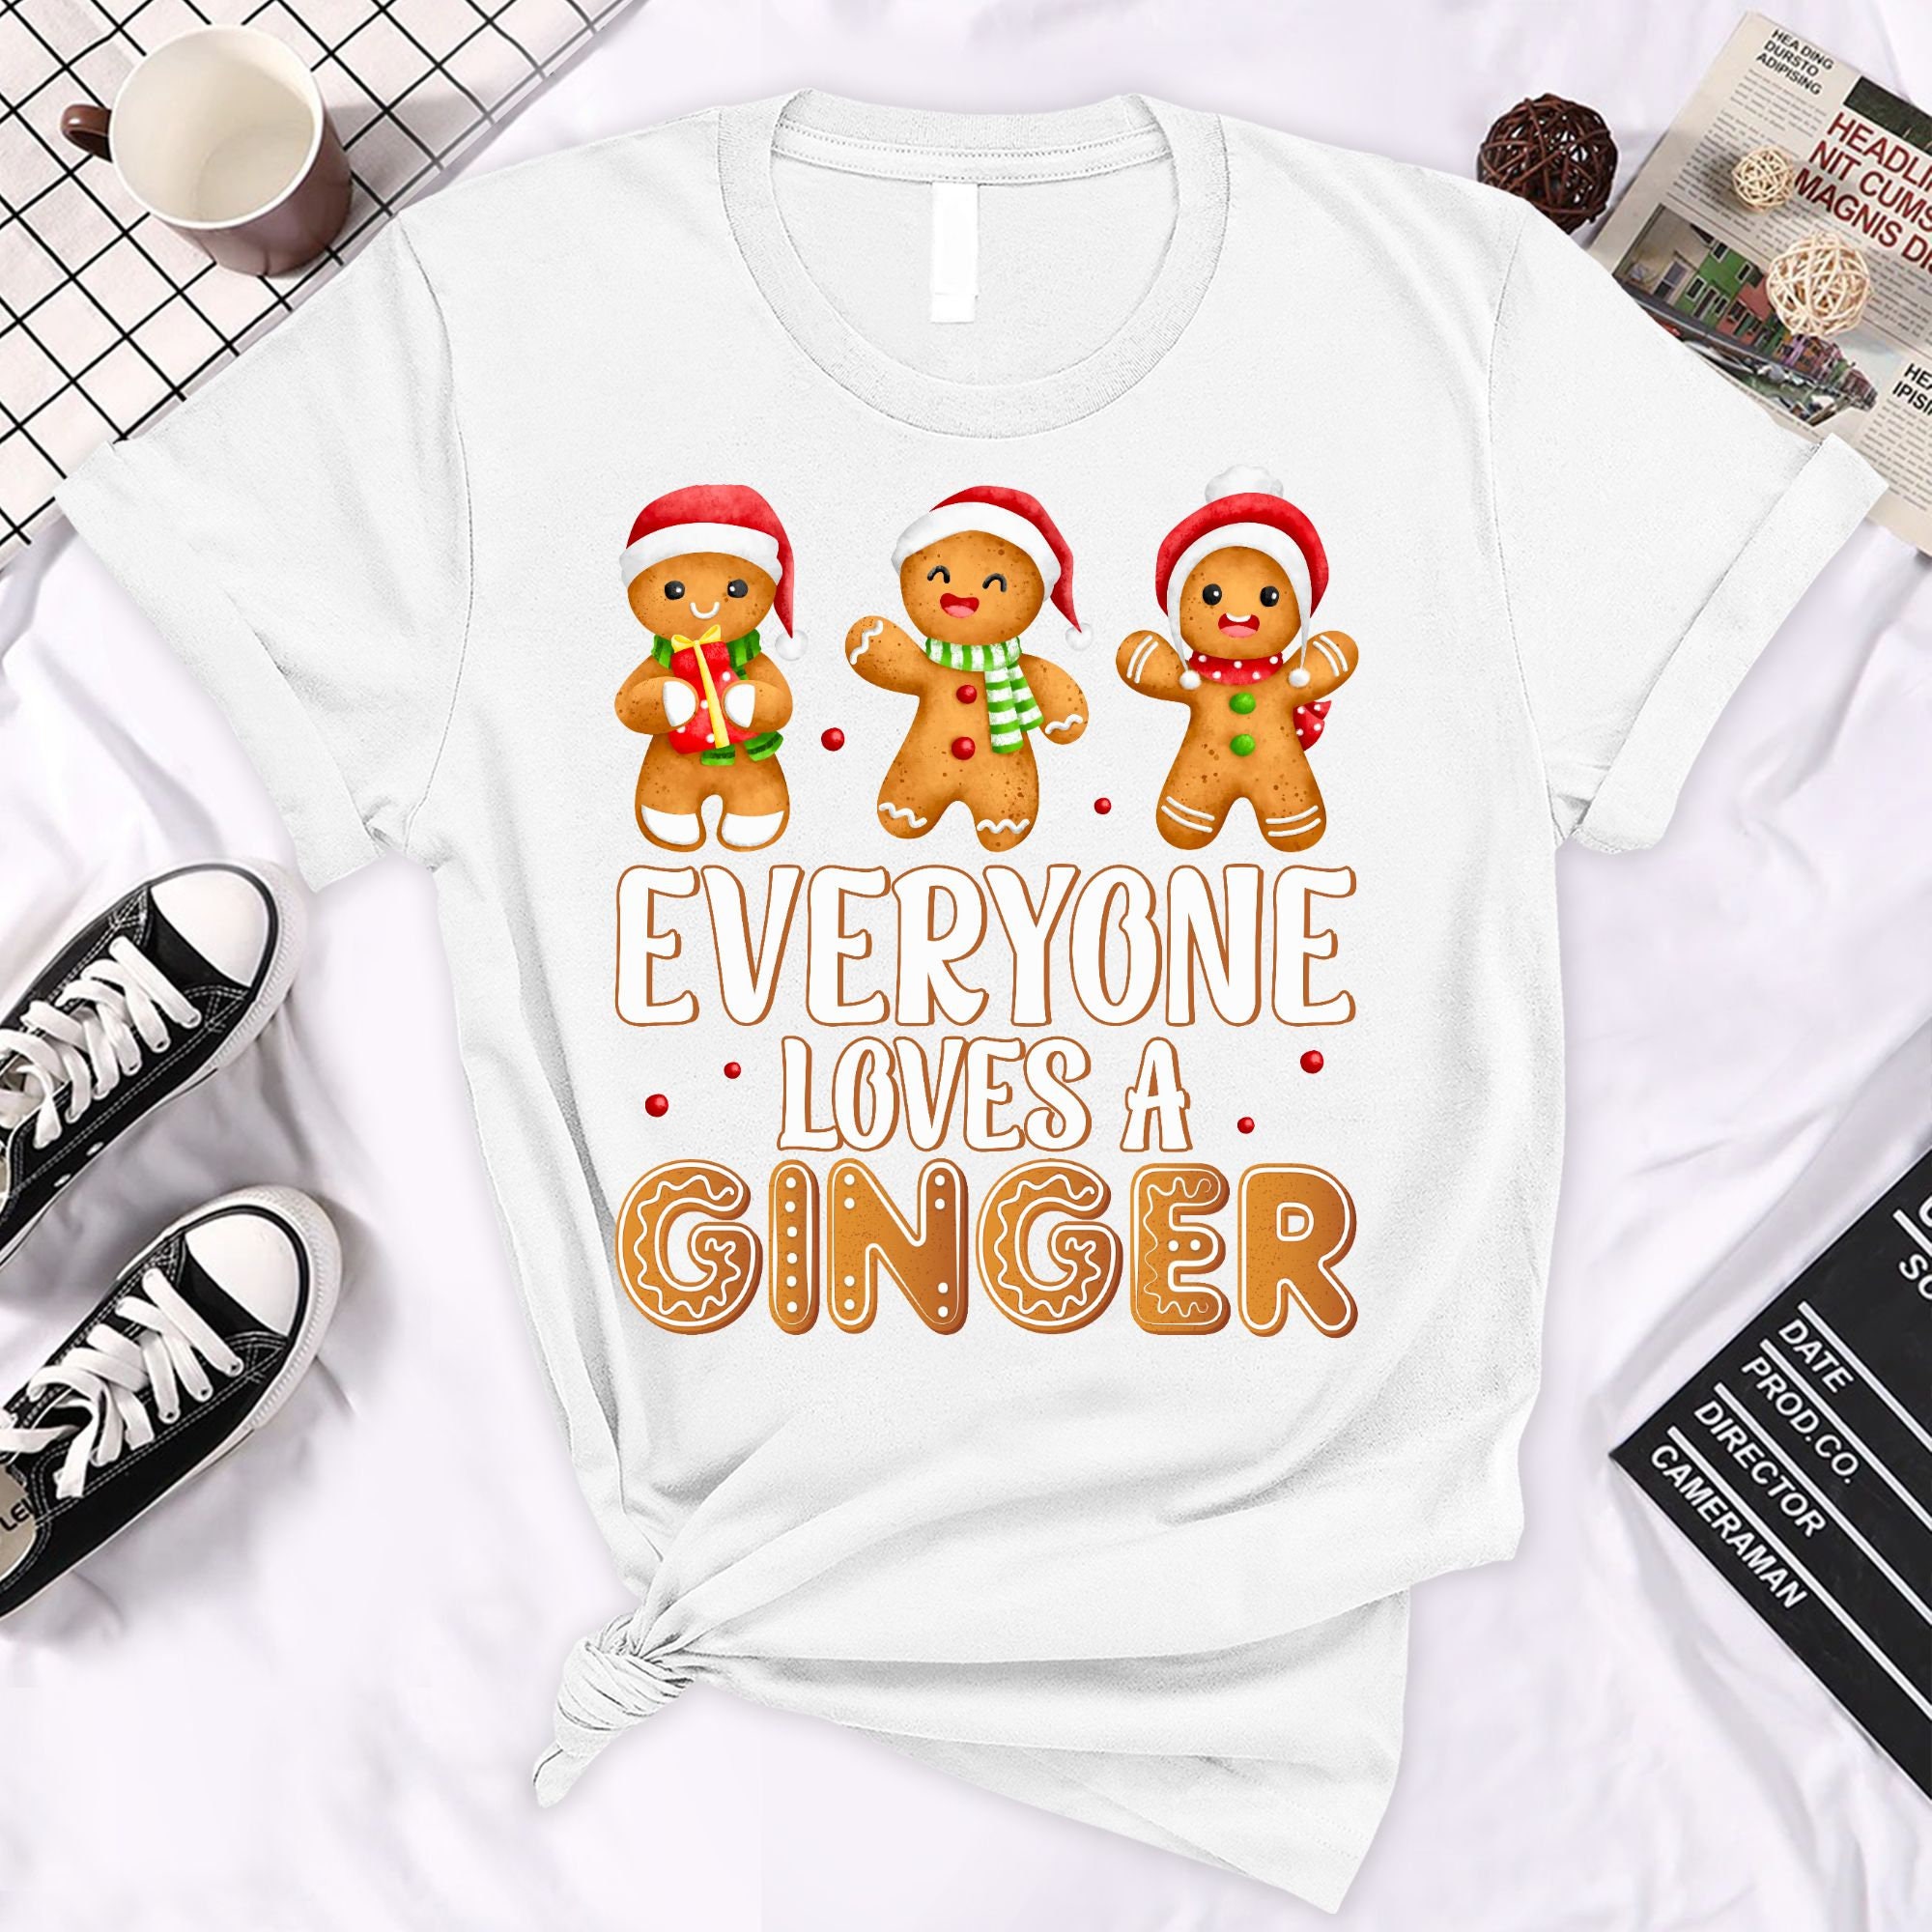 Discover Redhead Shirt, Everyone Loves A Ginger Shirt, Gingerbread Shirt